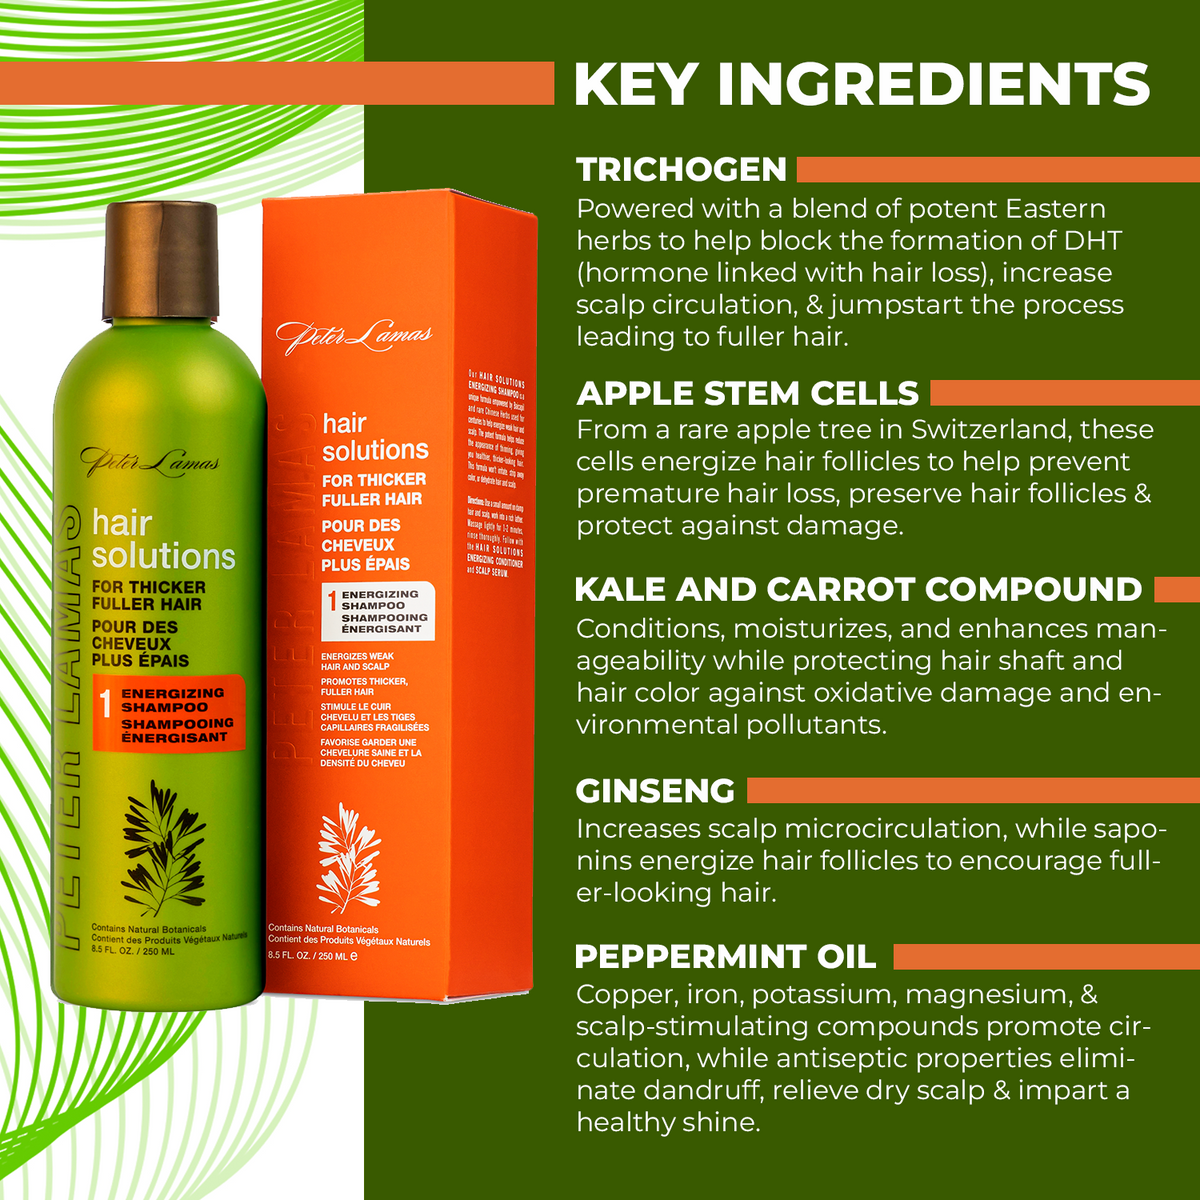 Hair Solutions | Energizing Hair Growth Shampoo!